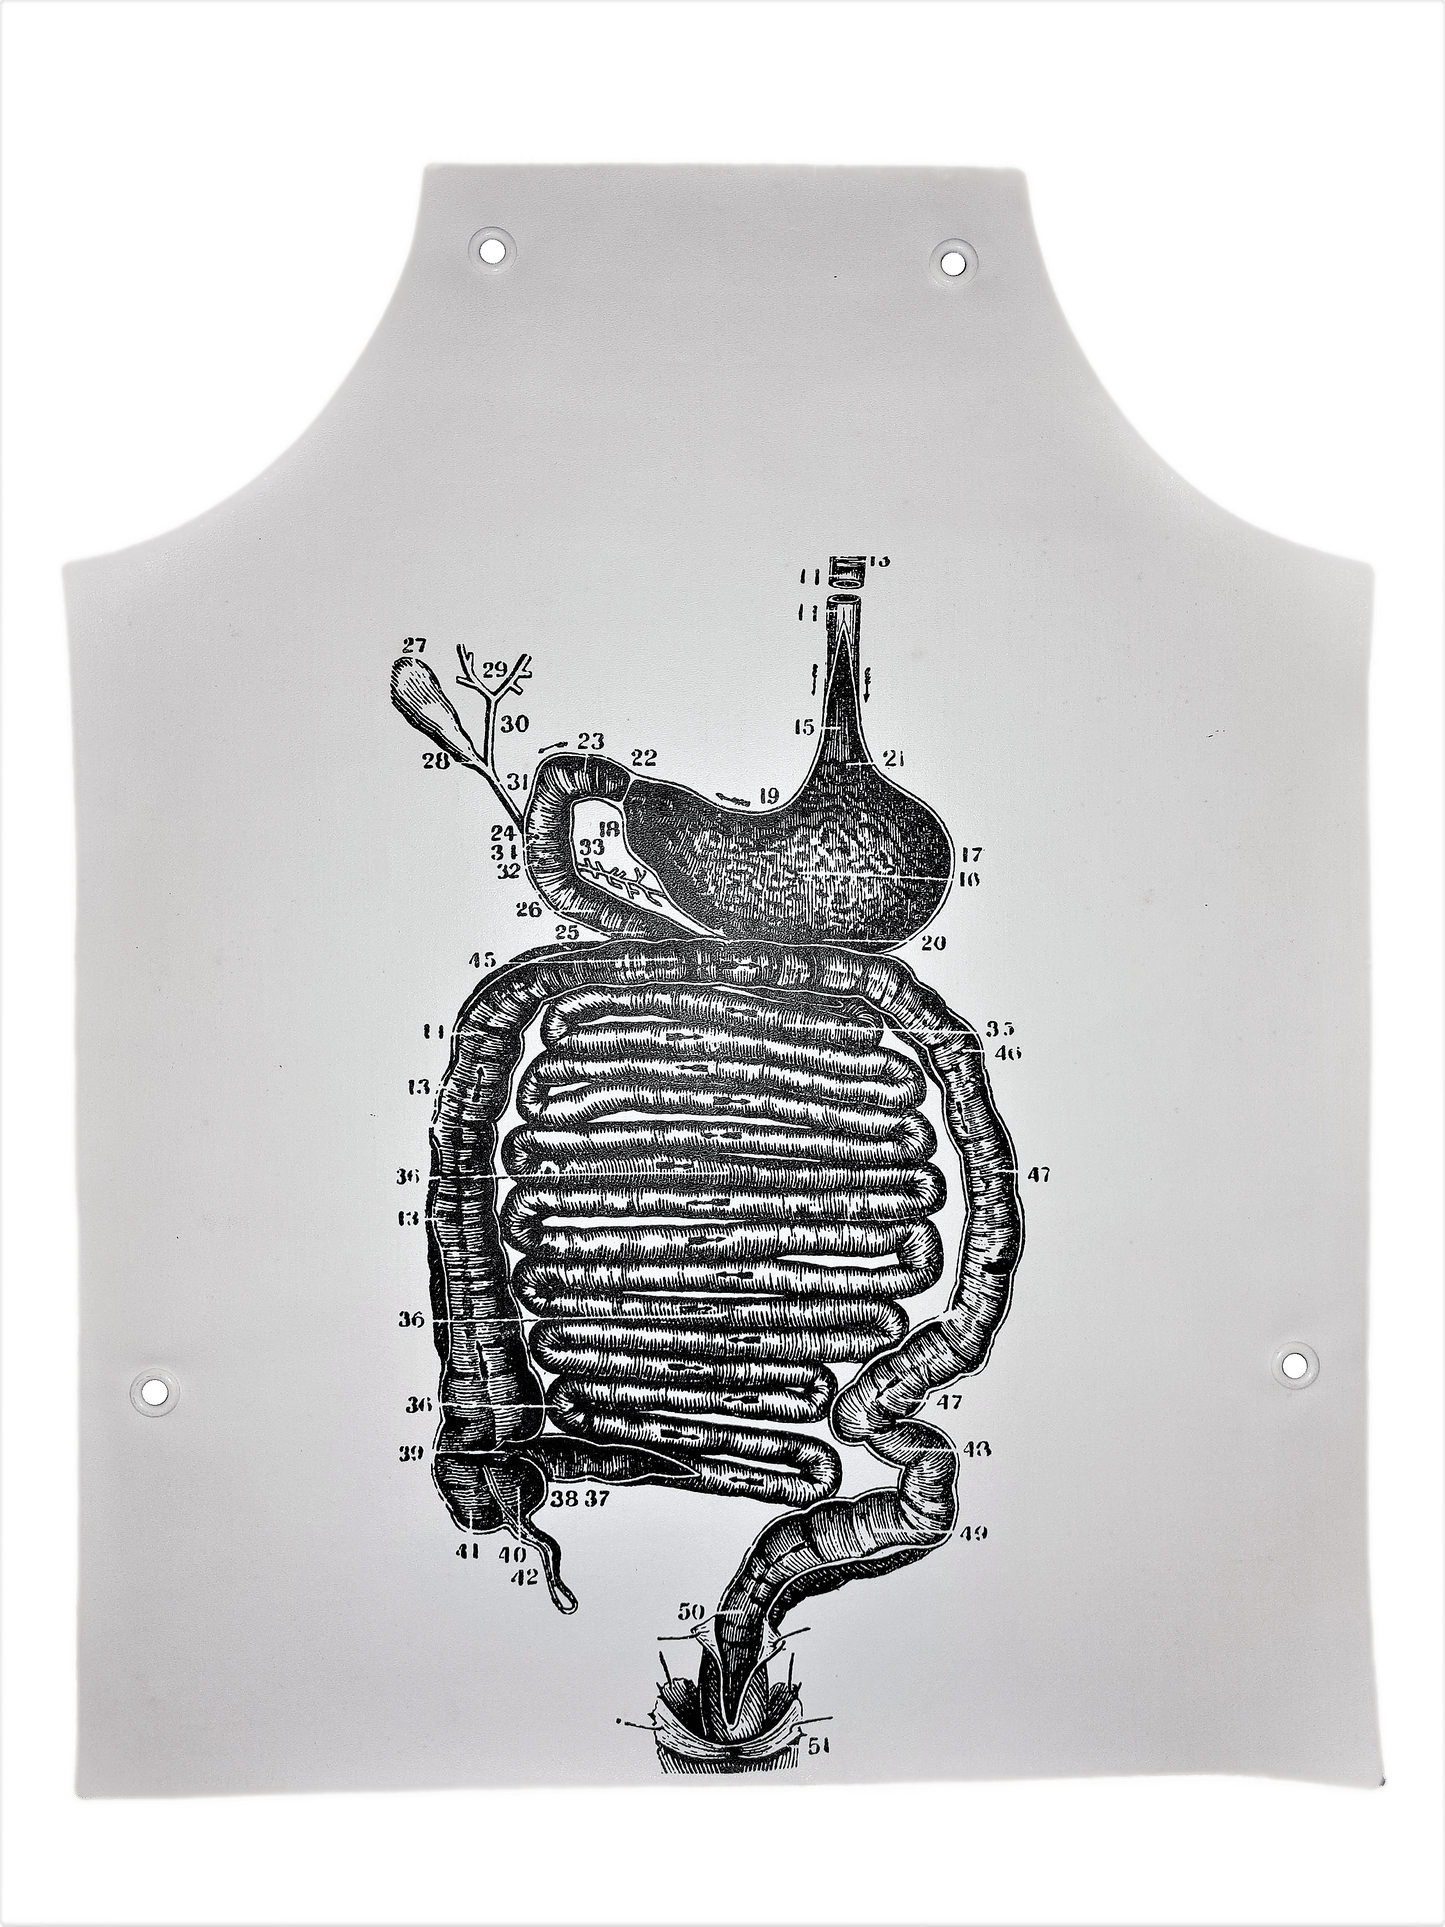 Jurgis Mačiūnas | Stomach Anatomy Apron, 1967-1973 | Screen printing on fabric vinyl with metal sleeves, 50.7x40.6